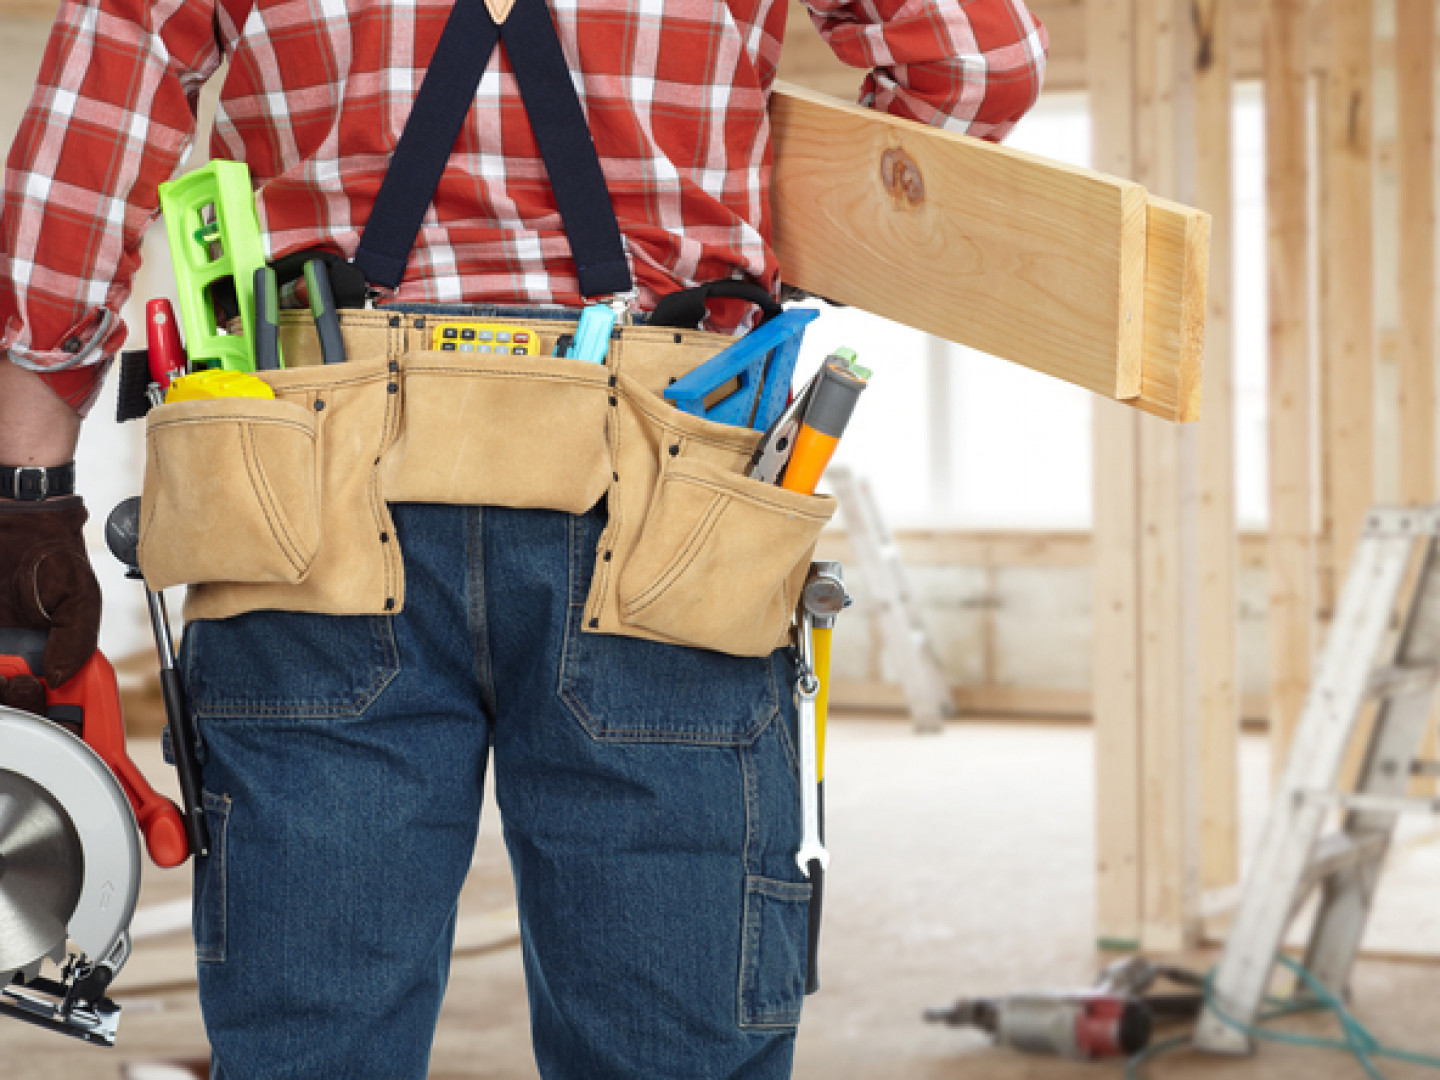 Handyman Services | George Ruiz Safes Locks and Keys, Expert Repairs ...